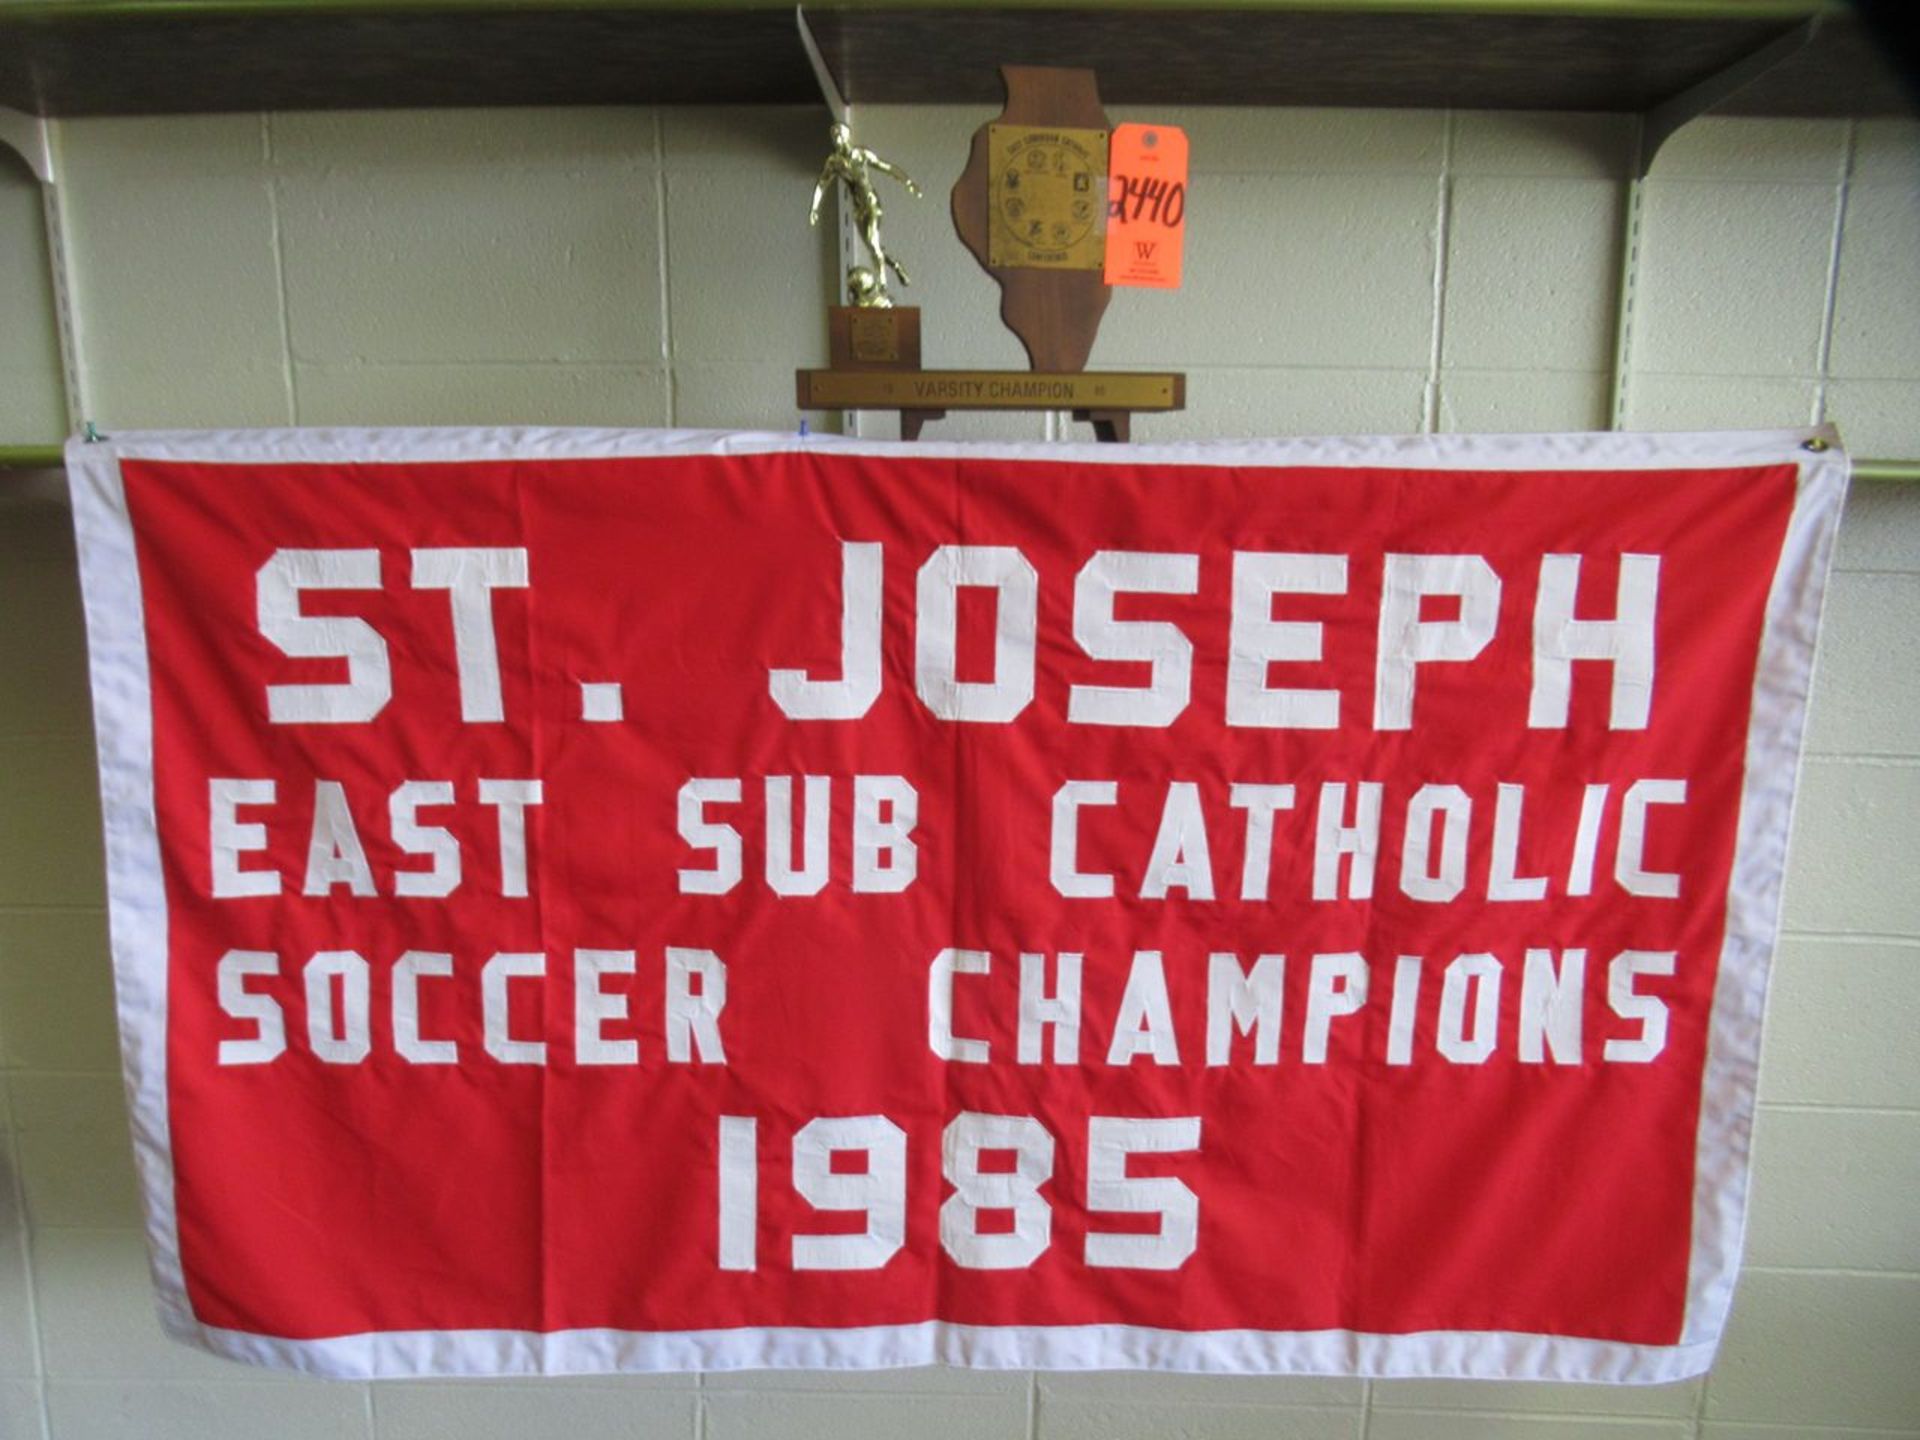 1985 East Suburban Catholic Conference Varsity Champion Soccer Trophy, 1985 St. Joseph East Sub